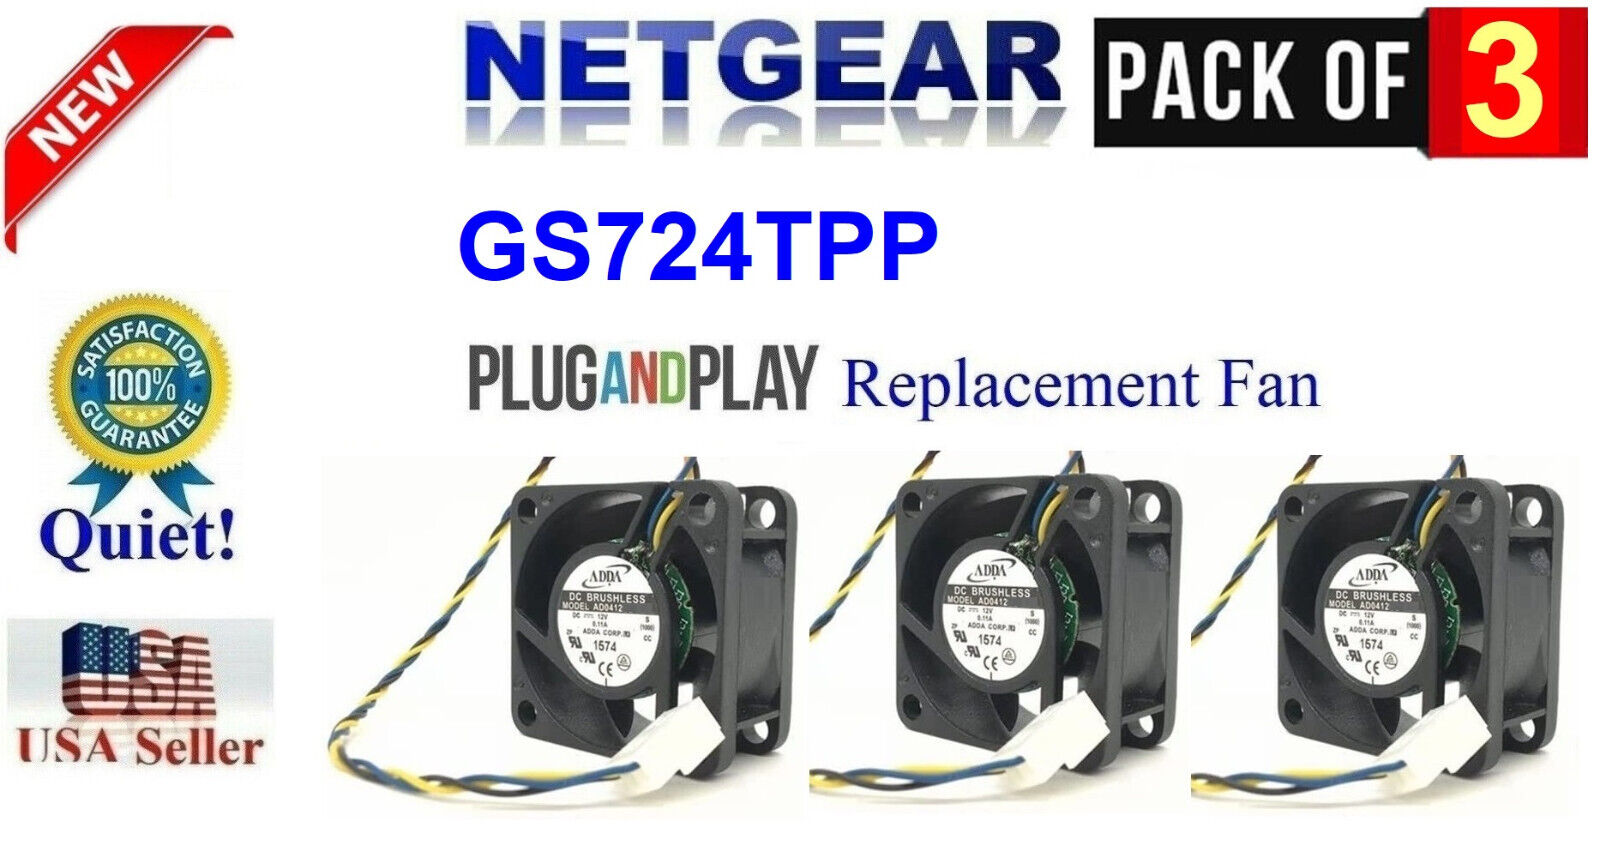 3x Quiet Replacement Fans for Netgear GS724TPP